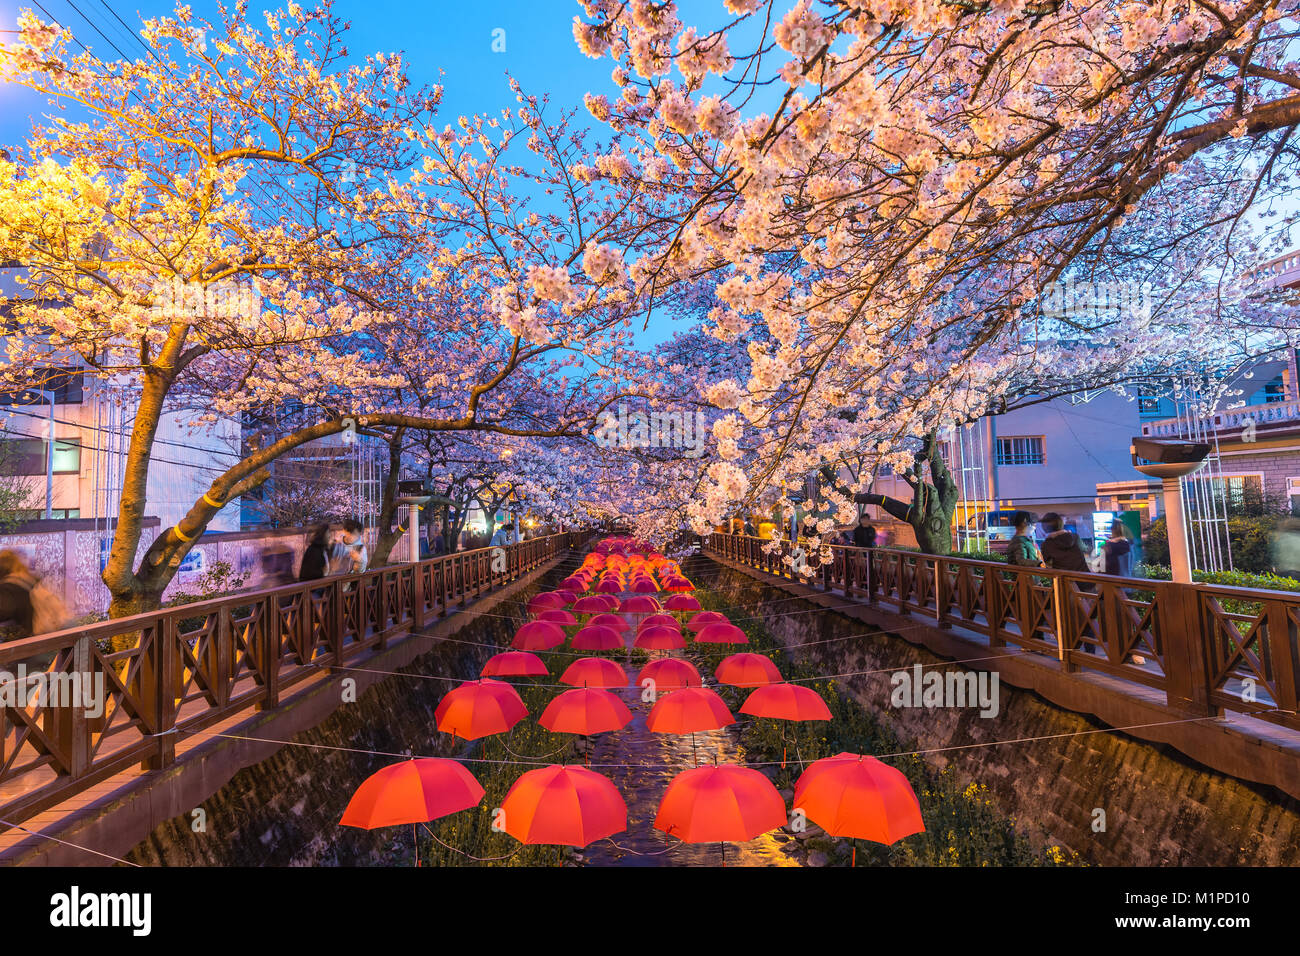 Spring Cherry blossom festival at Yeojwacheon Stream at night, Jinhae, South Korea Stock Photo